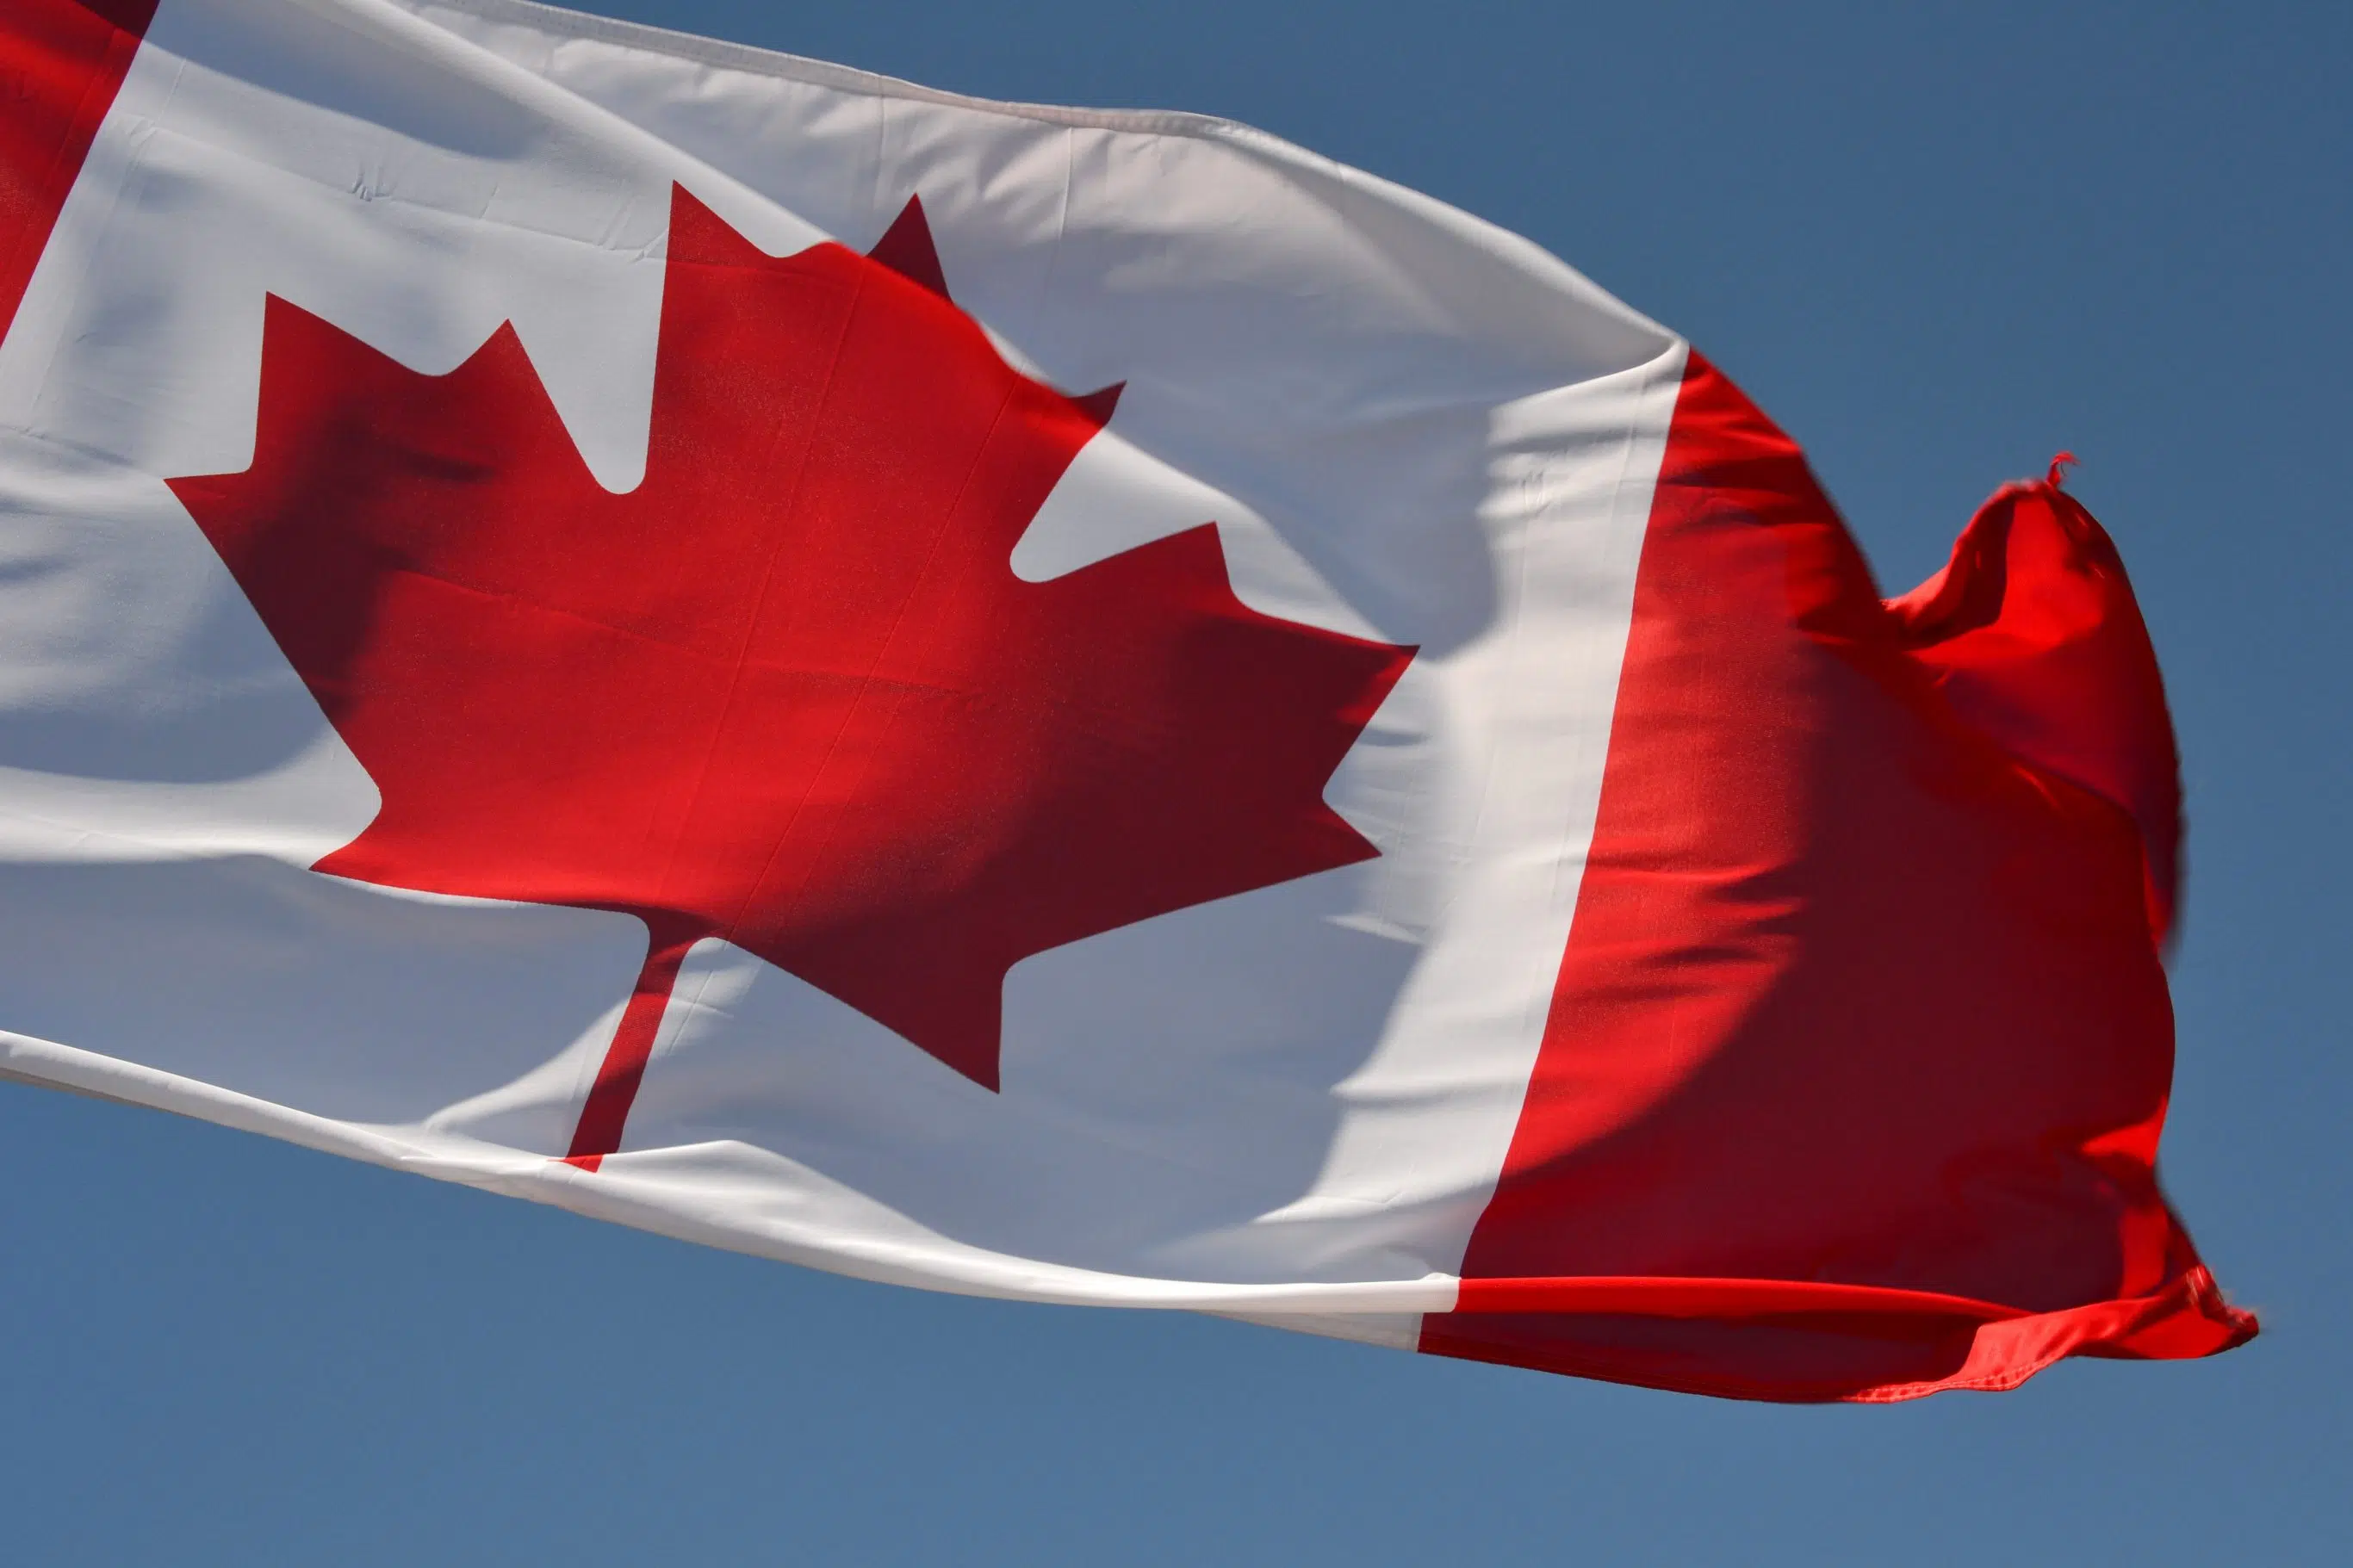 Local Canada Day celebrations